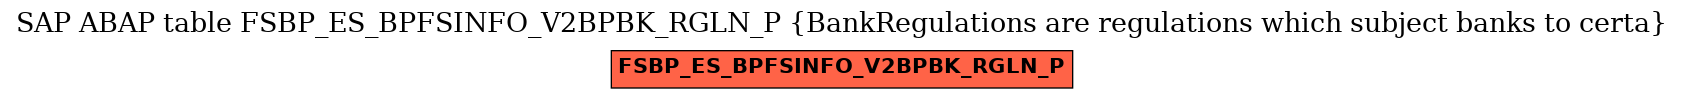 E-R Diagram for table FSBP_ES_BPFSINFO_V2BPBK_RGLN_P (BankRegulations are regulations which subject banks to certa)